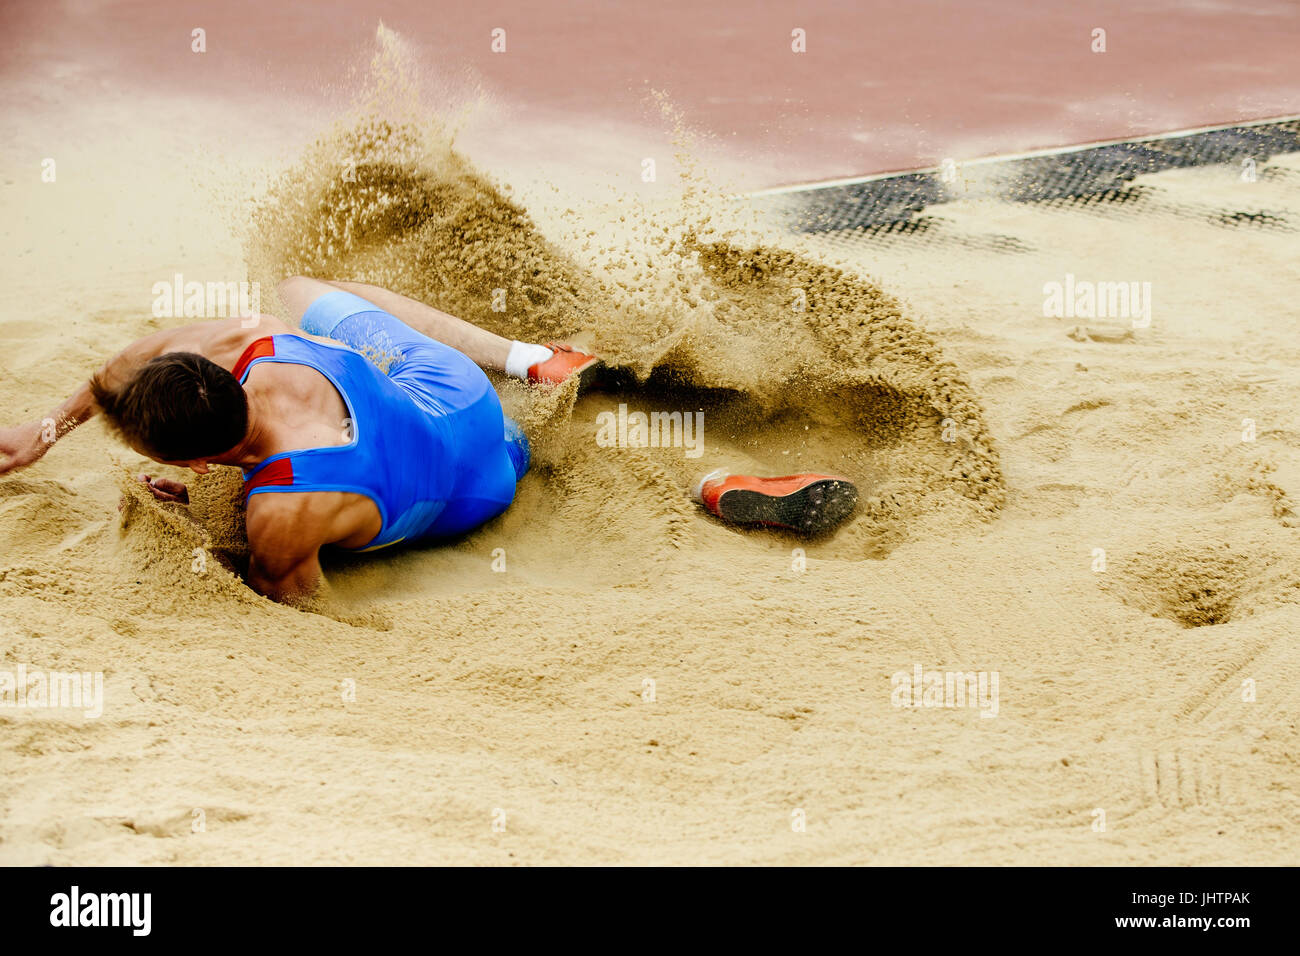 Atleta Masculino en salto de longitud de arena de aterrizaje spray Foto de stock